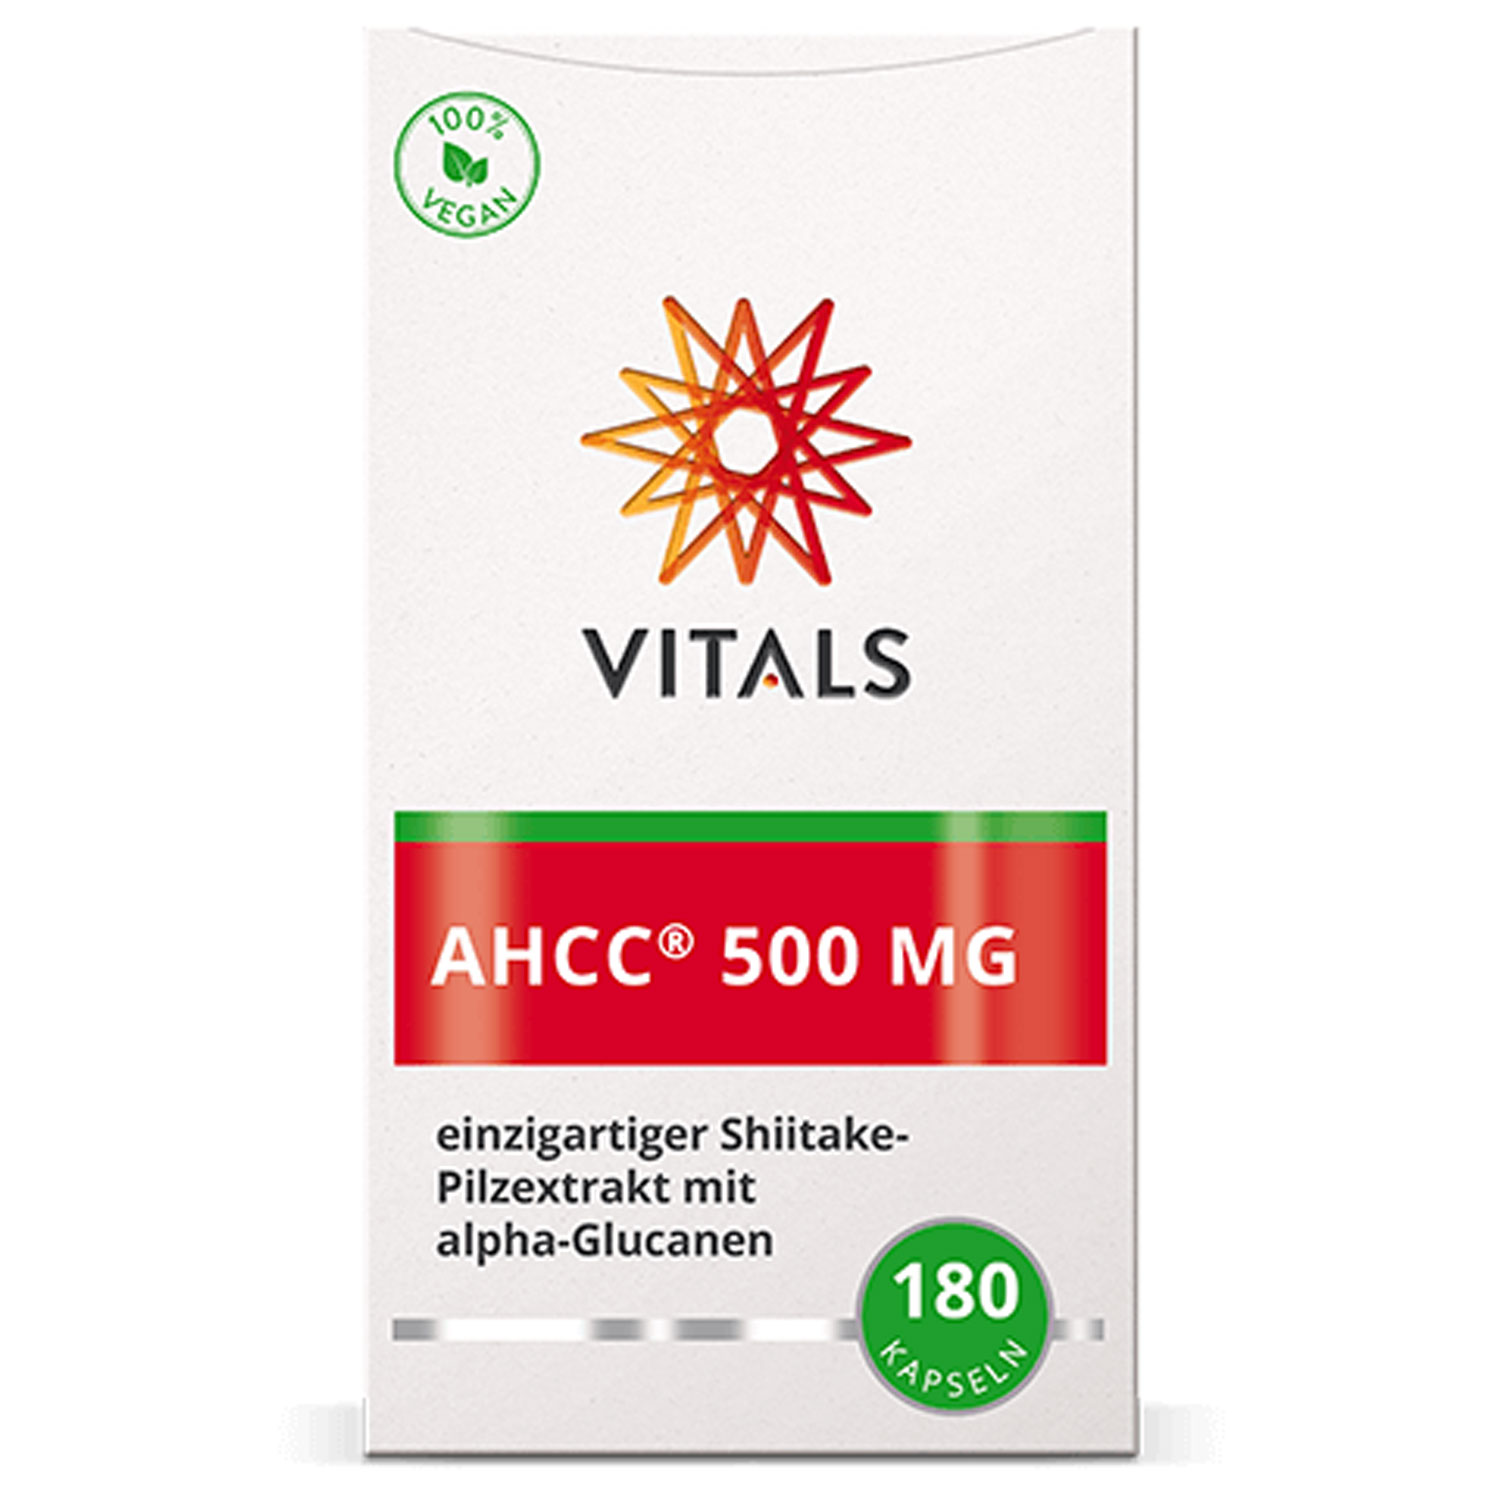 AHCC 500MG von Vitals - Verpackung